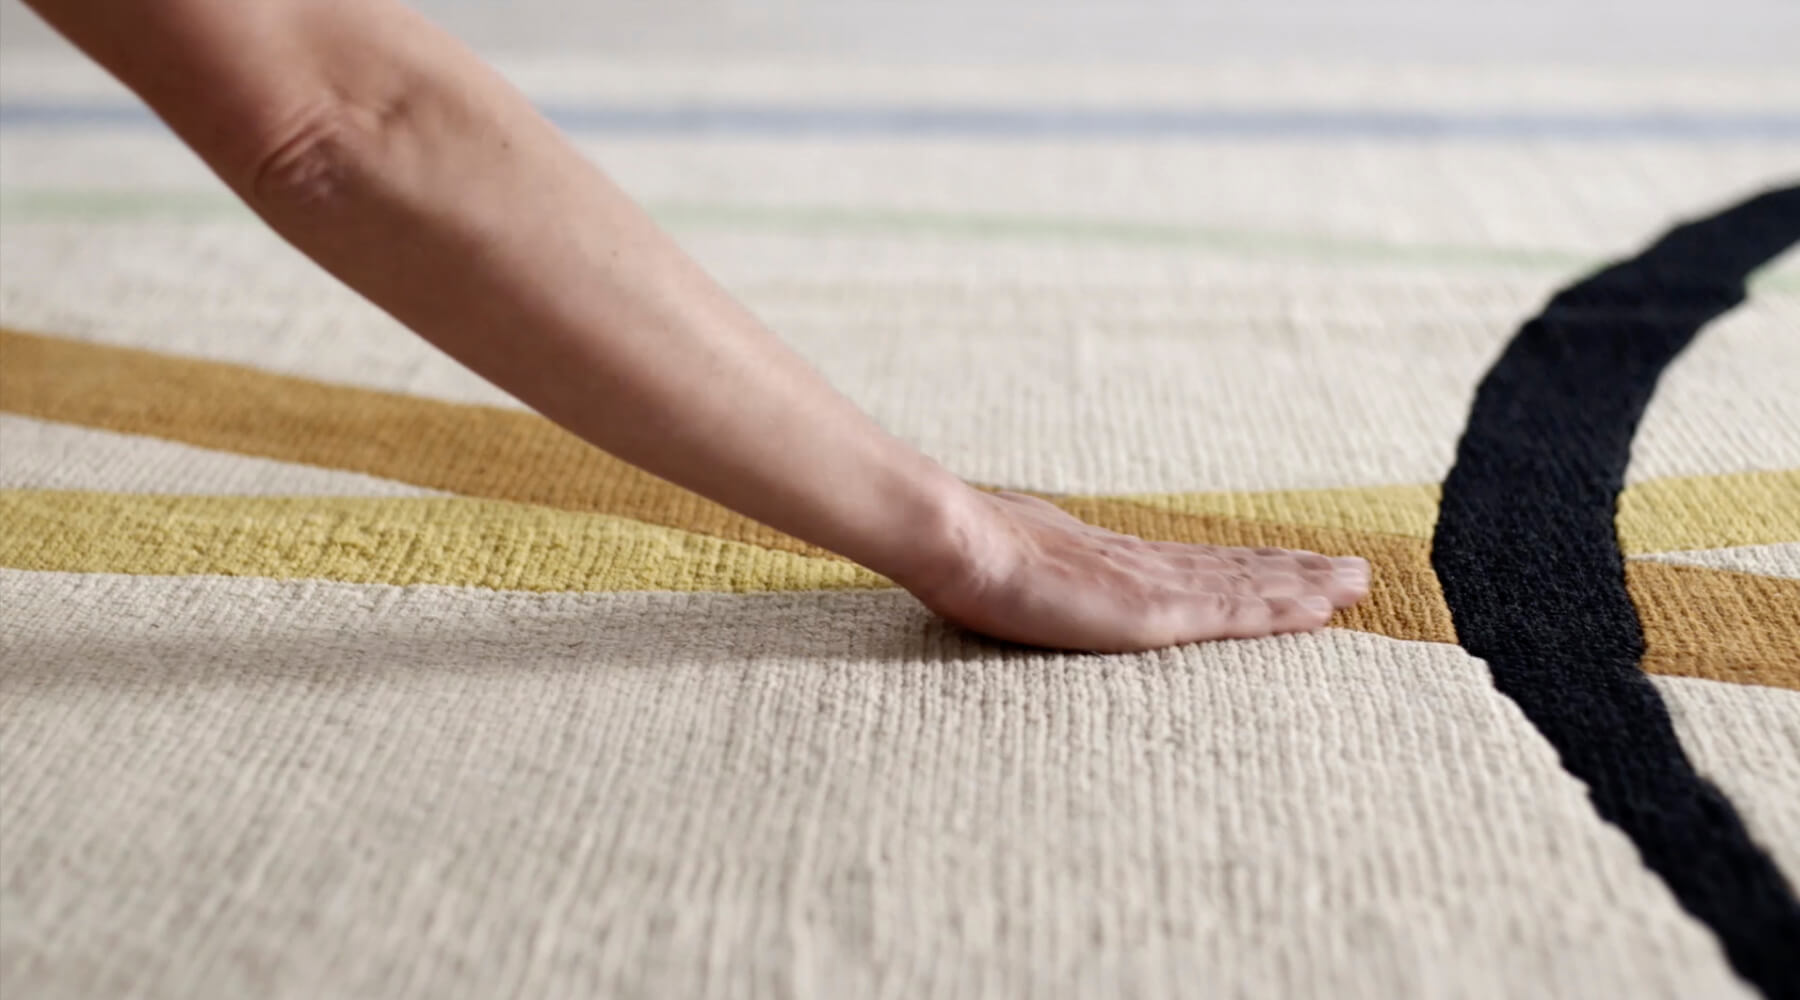 Letter carpet designed by Gio Ponti